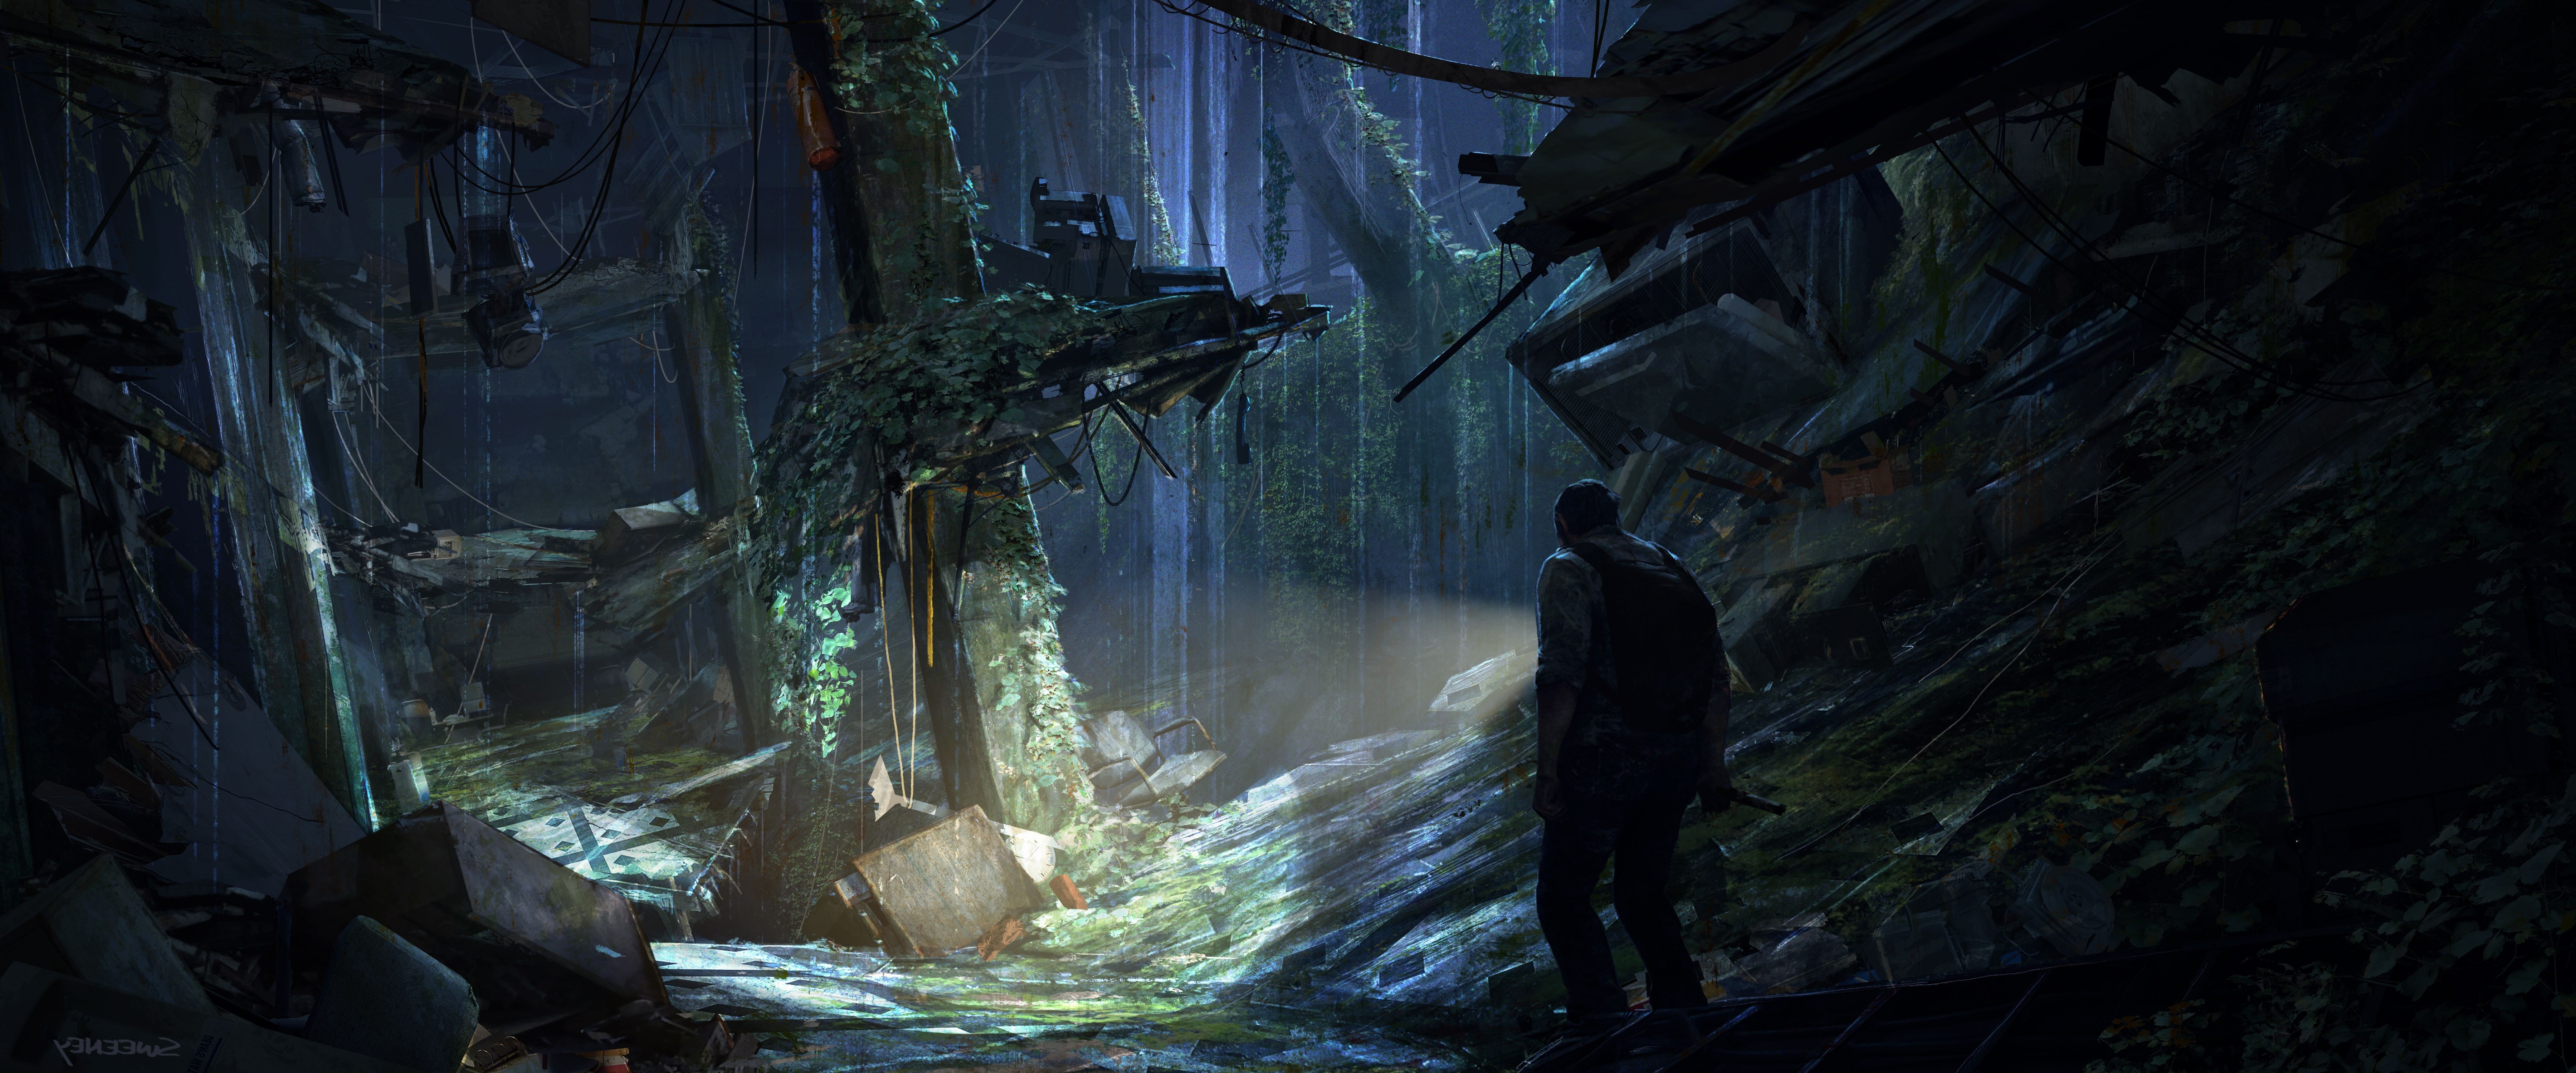 The Last Of Us, Concept Art, Video Games, Digital 2D ...